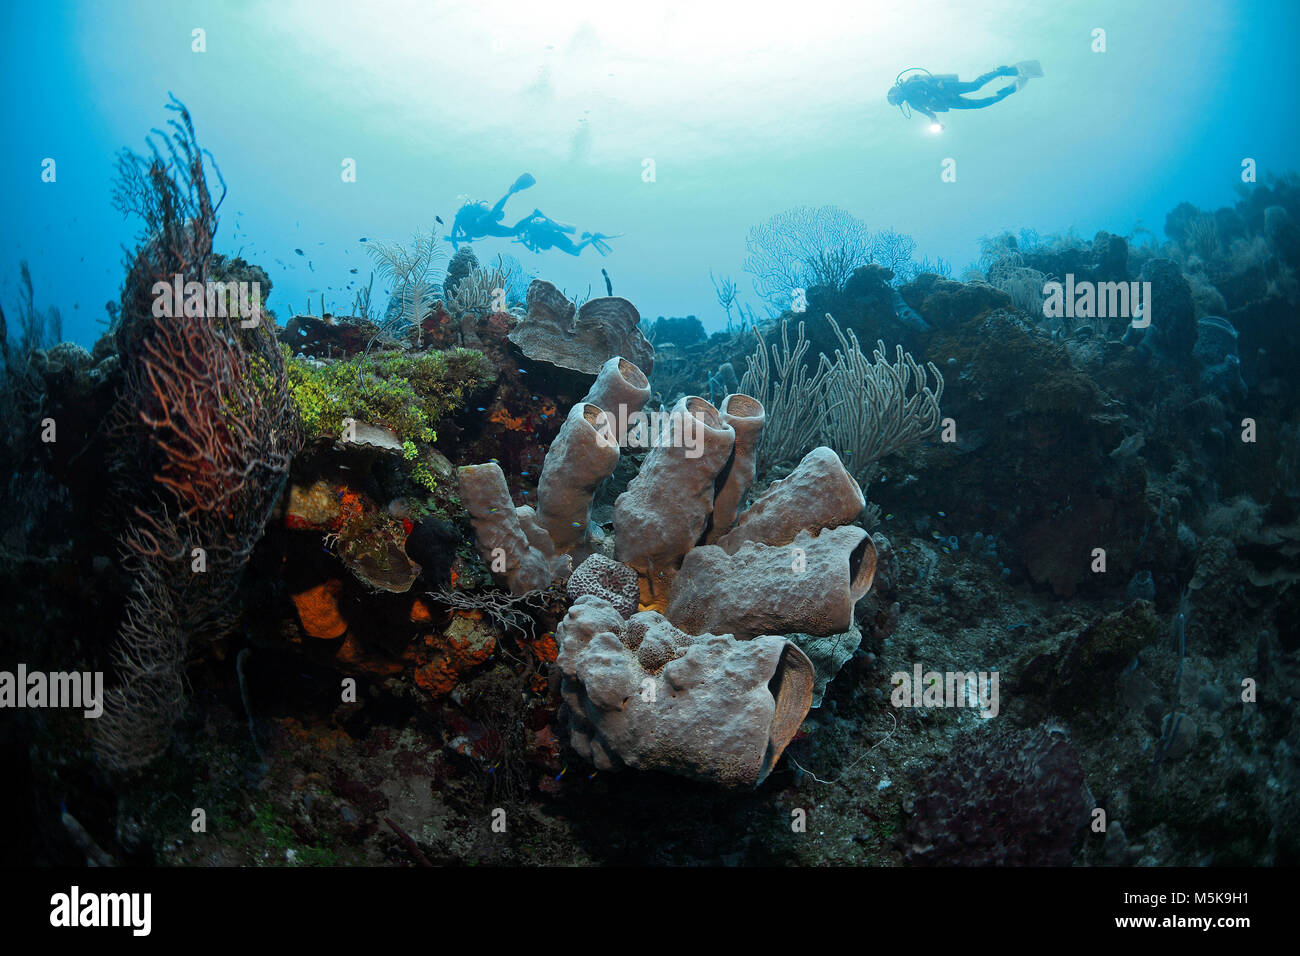 Scuba diver at a caribbean coral reef, Palmetto Bay, Roatan island, Bay islands, Honduras, Caribbean Stock Photo